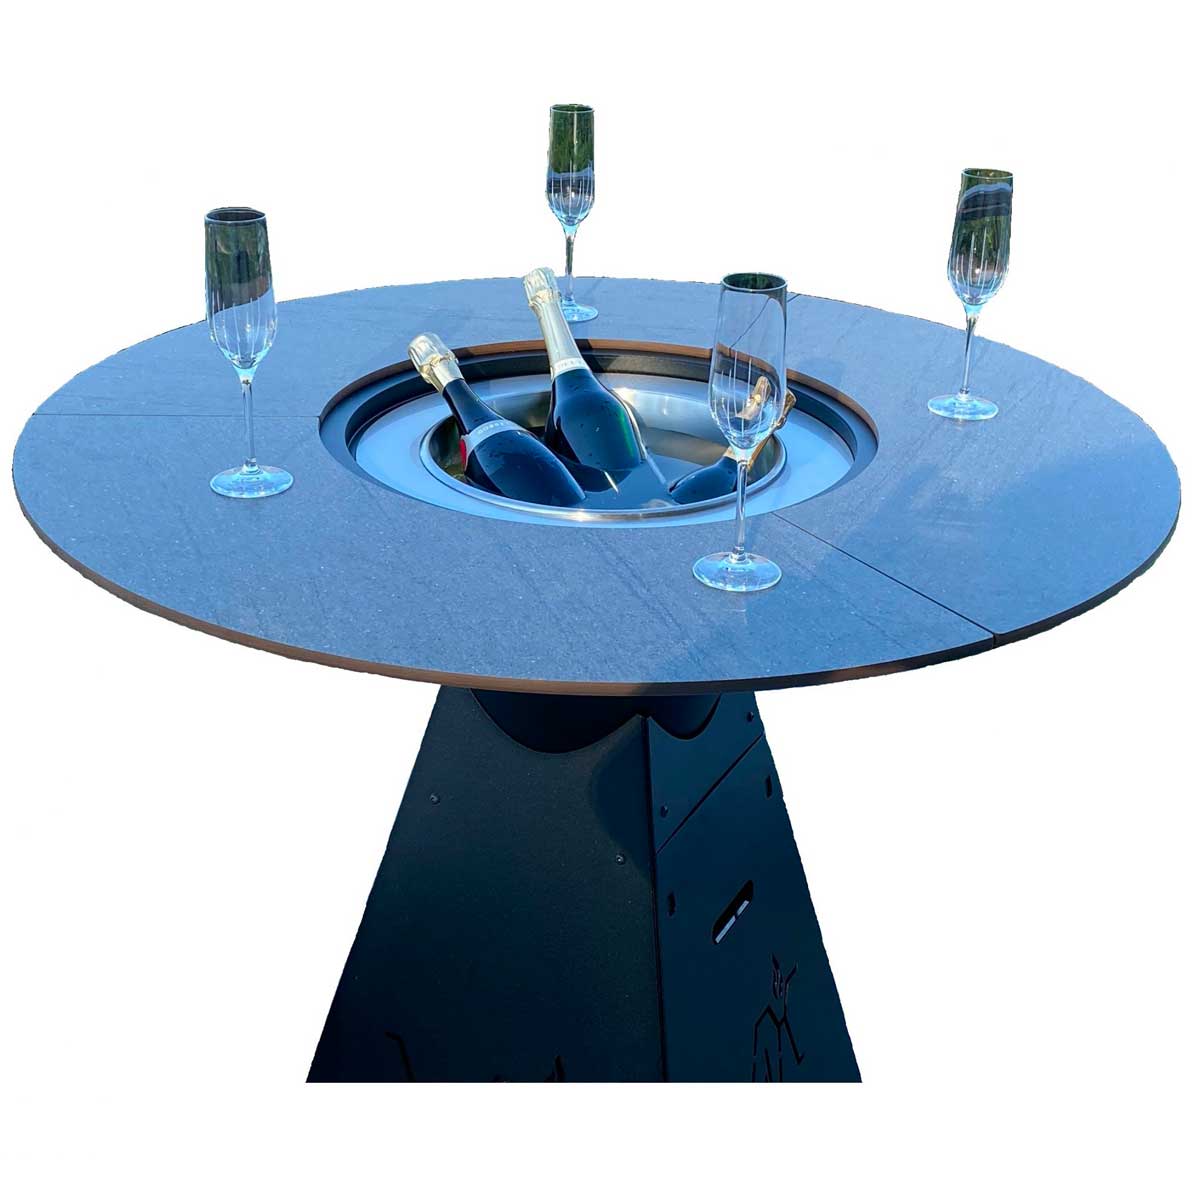 Table plancha/barbecue/braséro VULX MAGMA avec seau à champagne en inox avec support en option